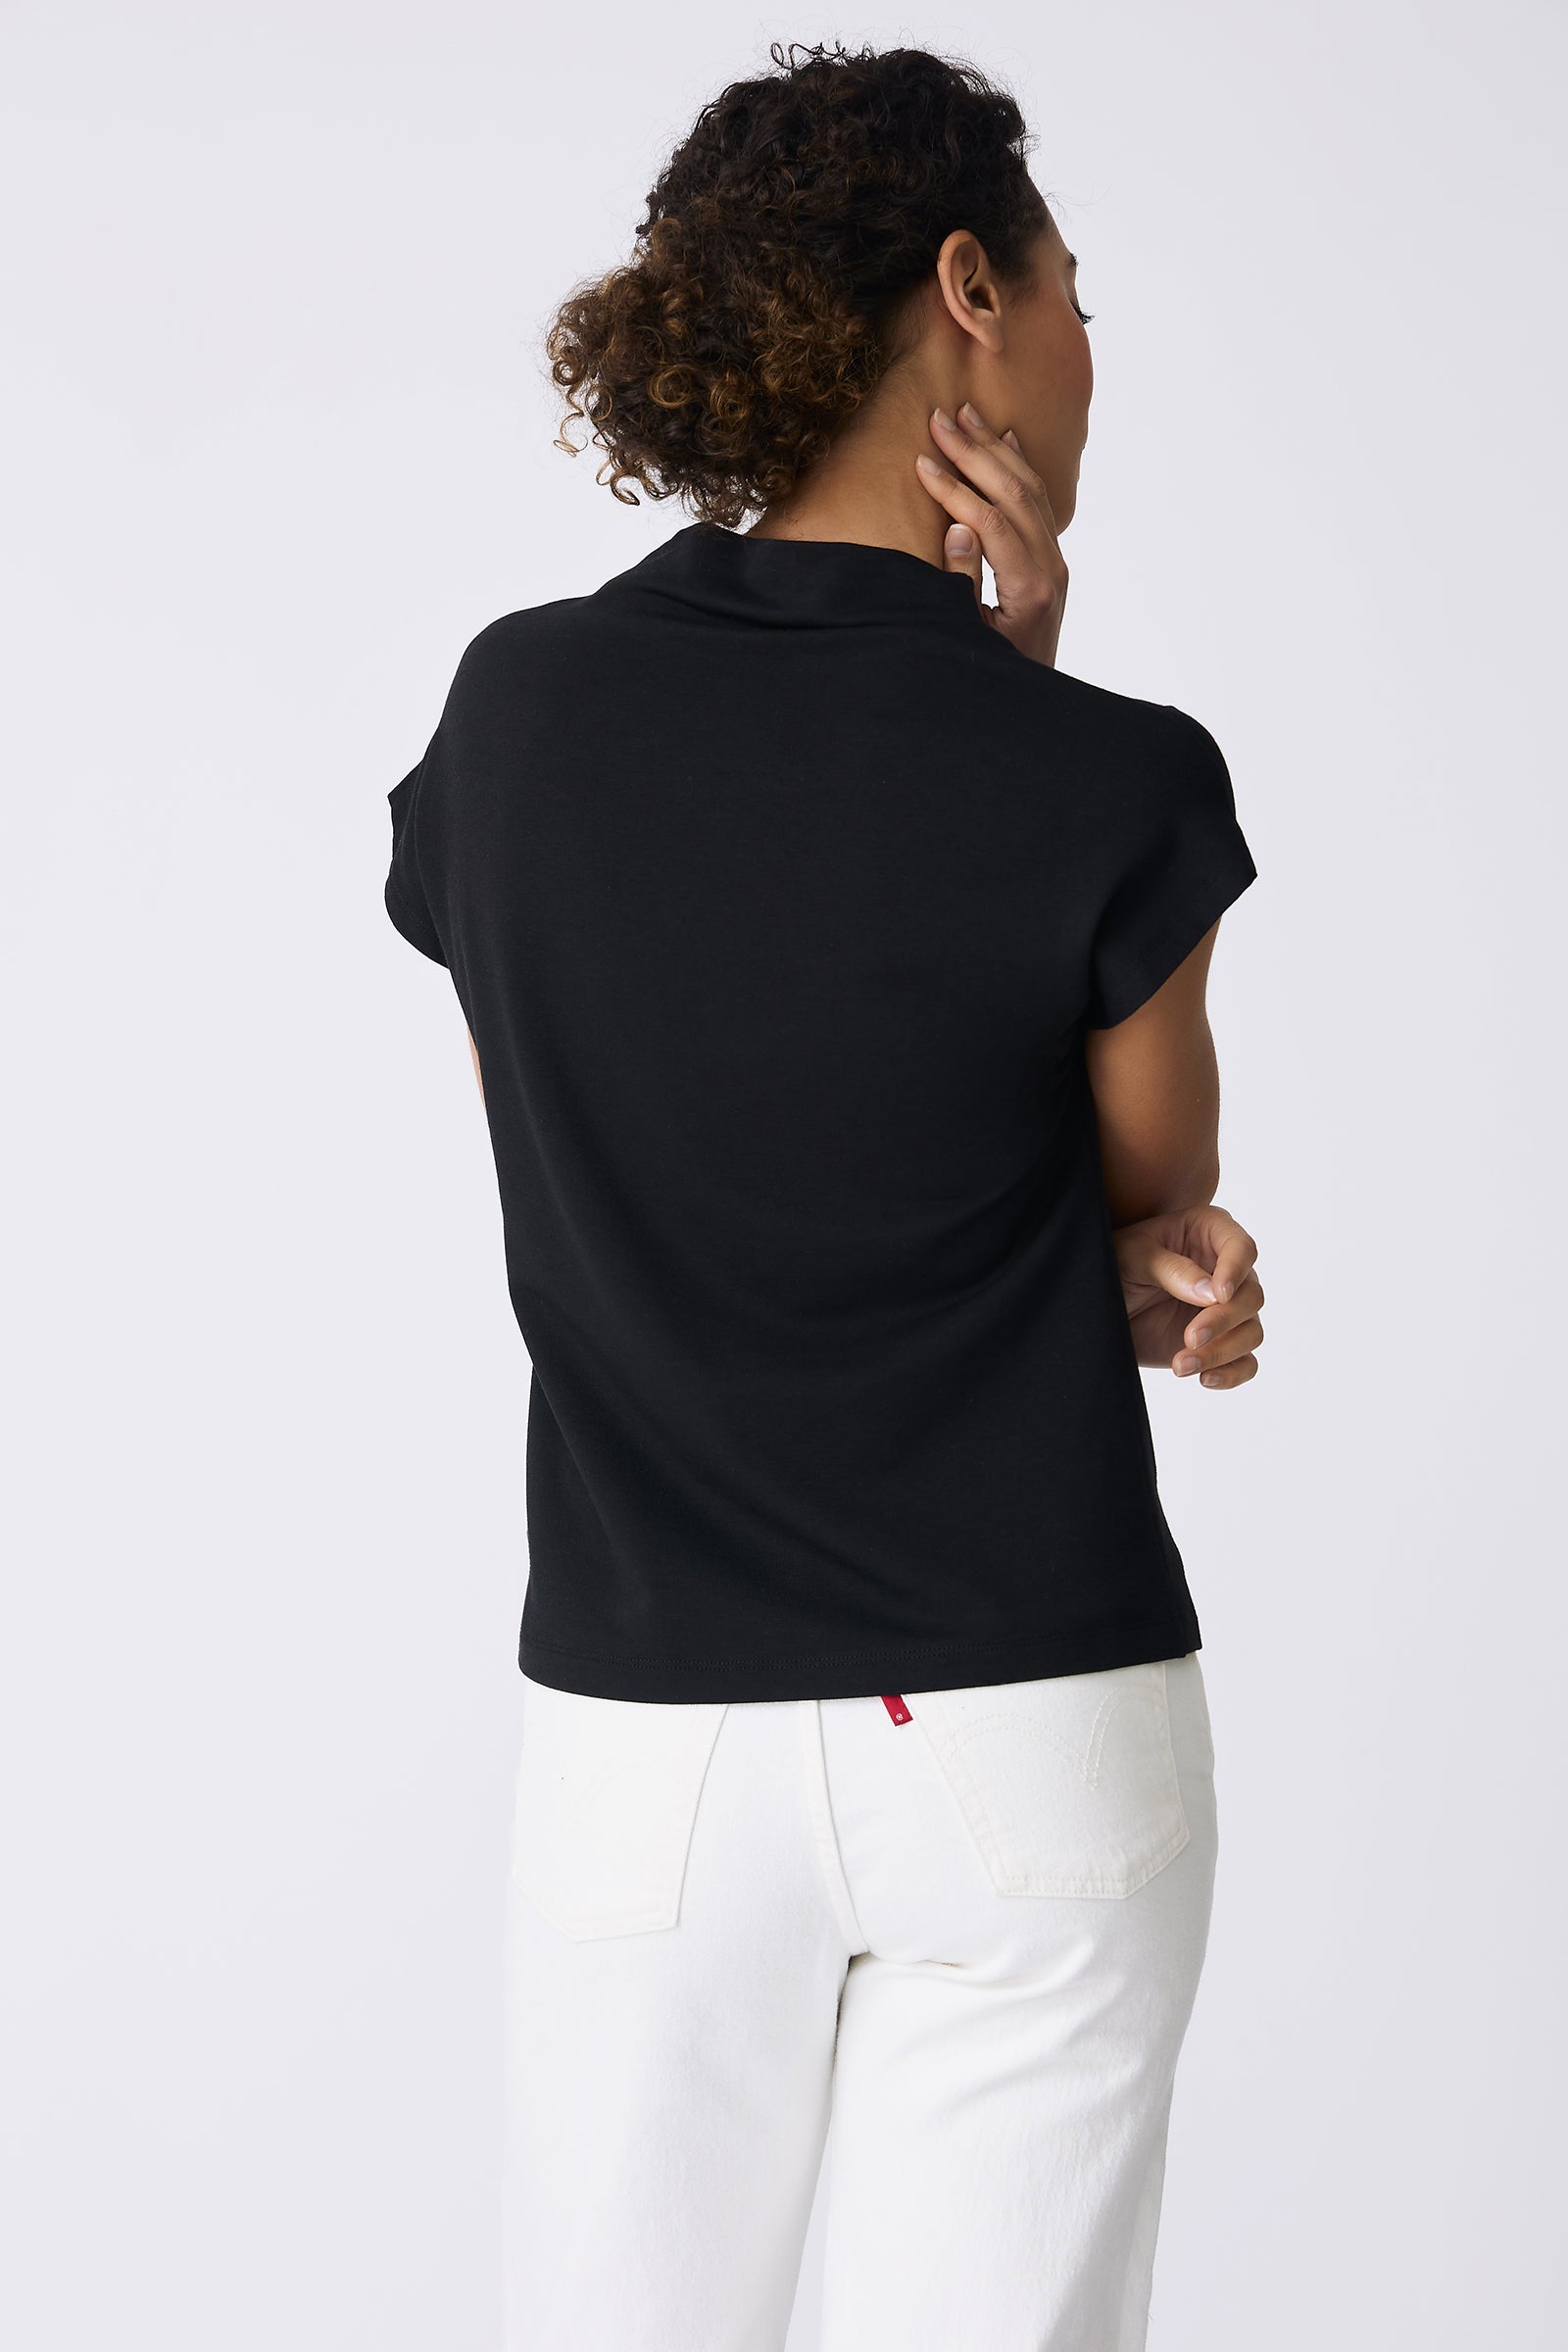 Kal Rieman Luca Cowl Top in Black on model back view